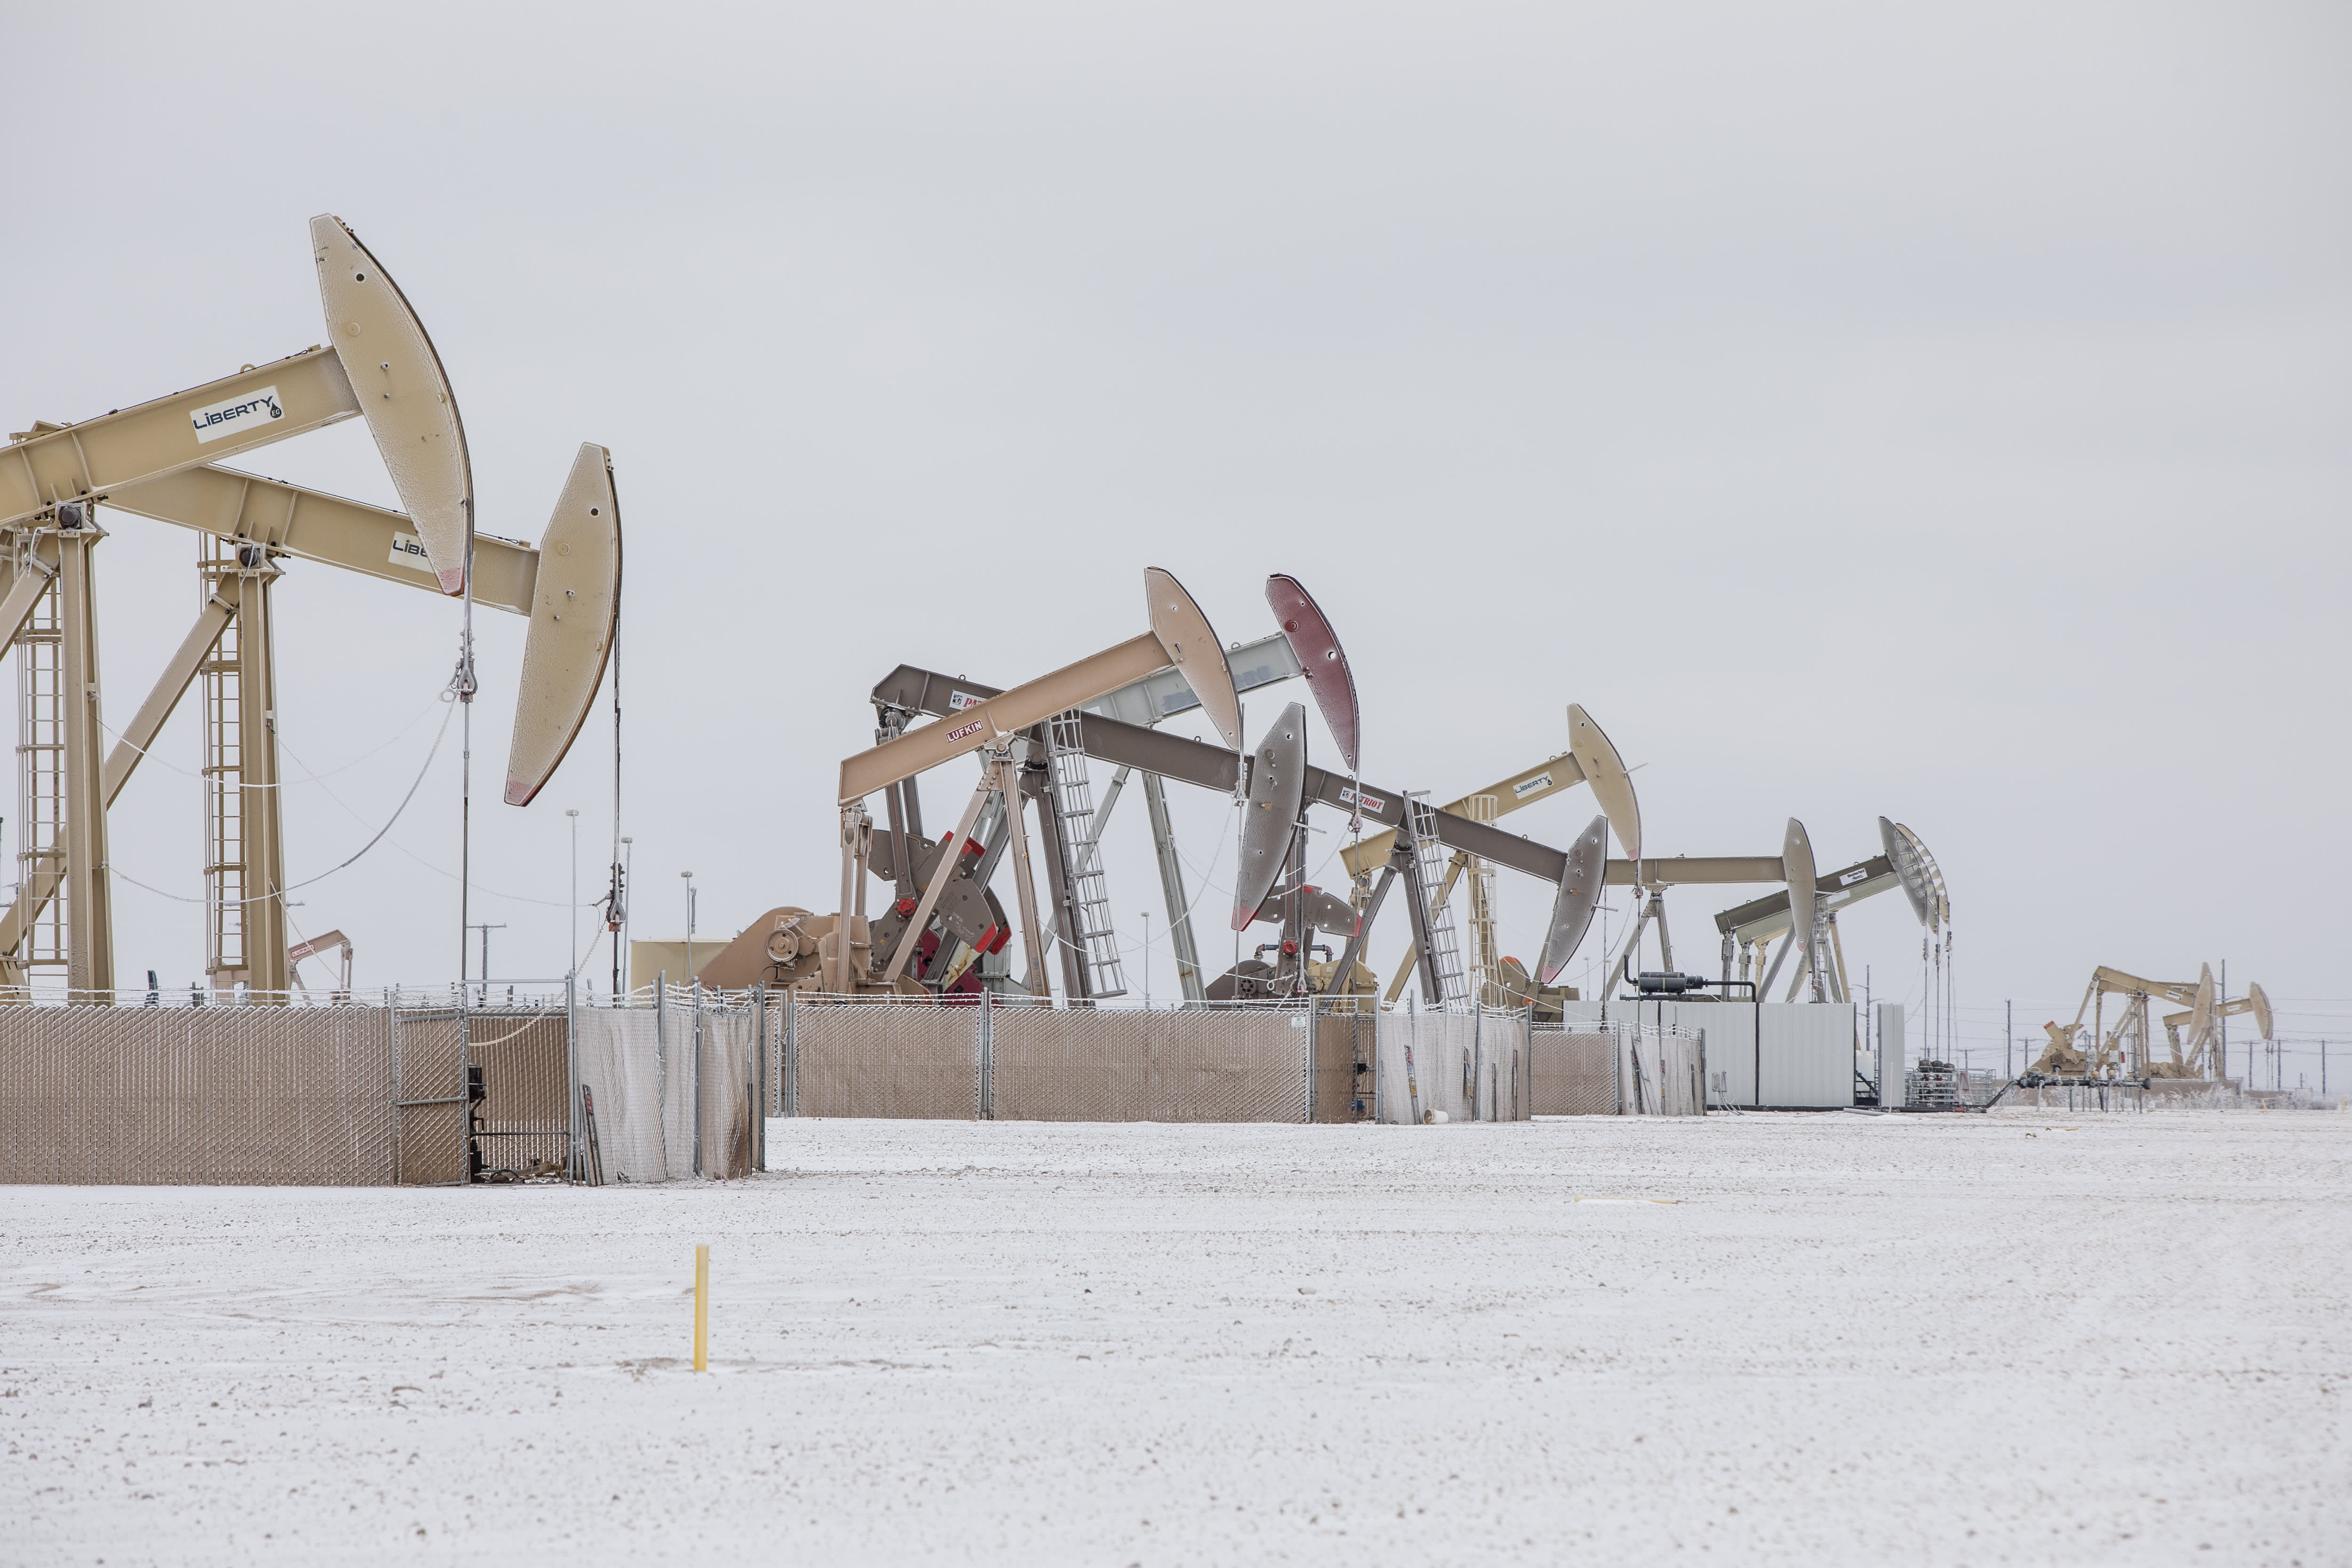 Texas Freeze Helps Competitive Oil Exporters Like Saudi Arabia, OPEC Members